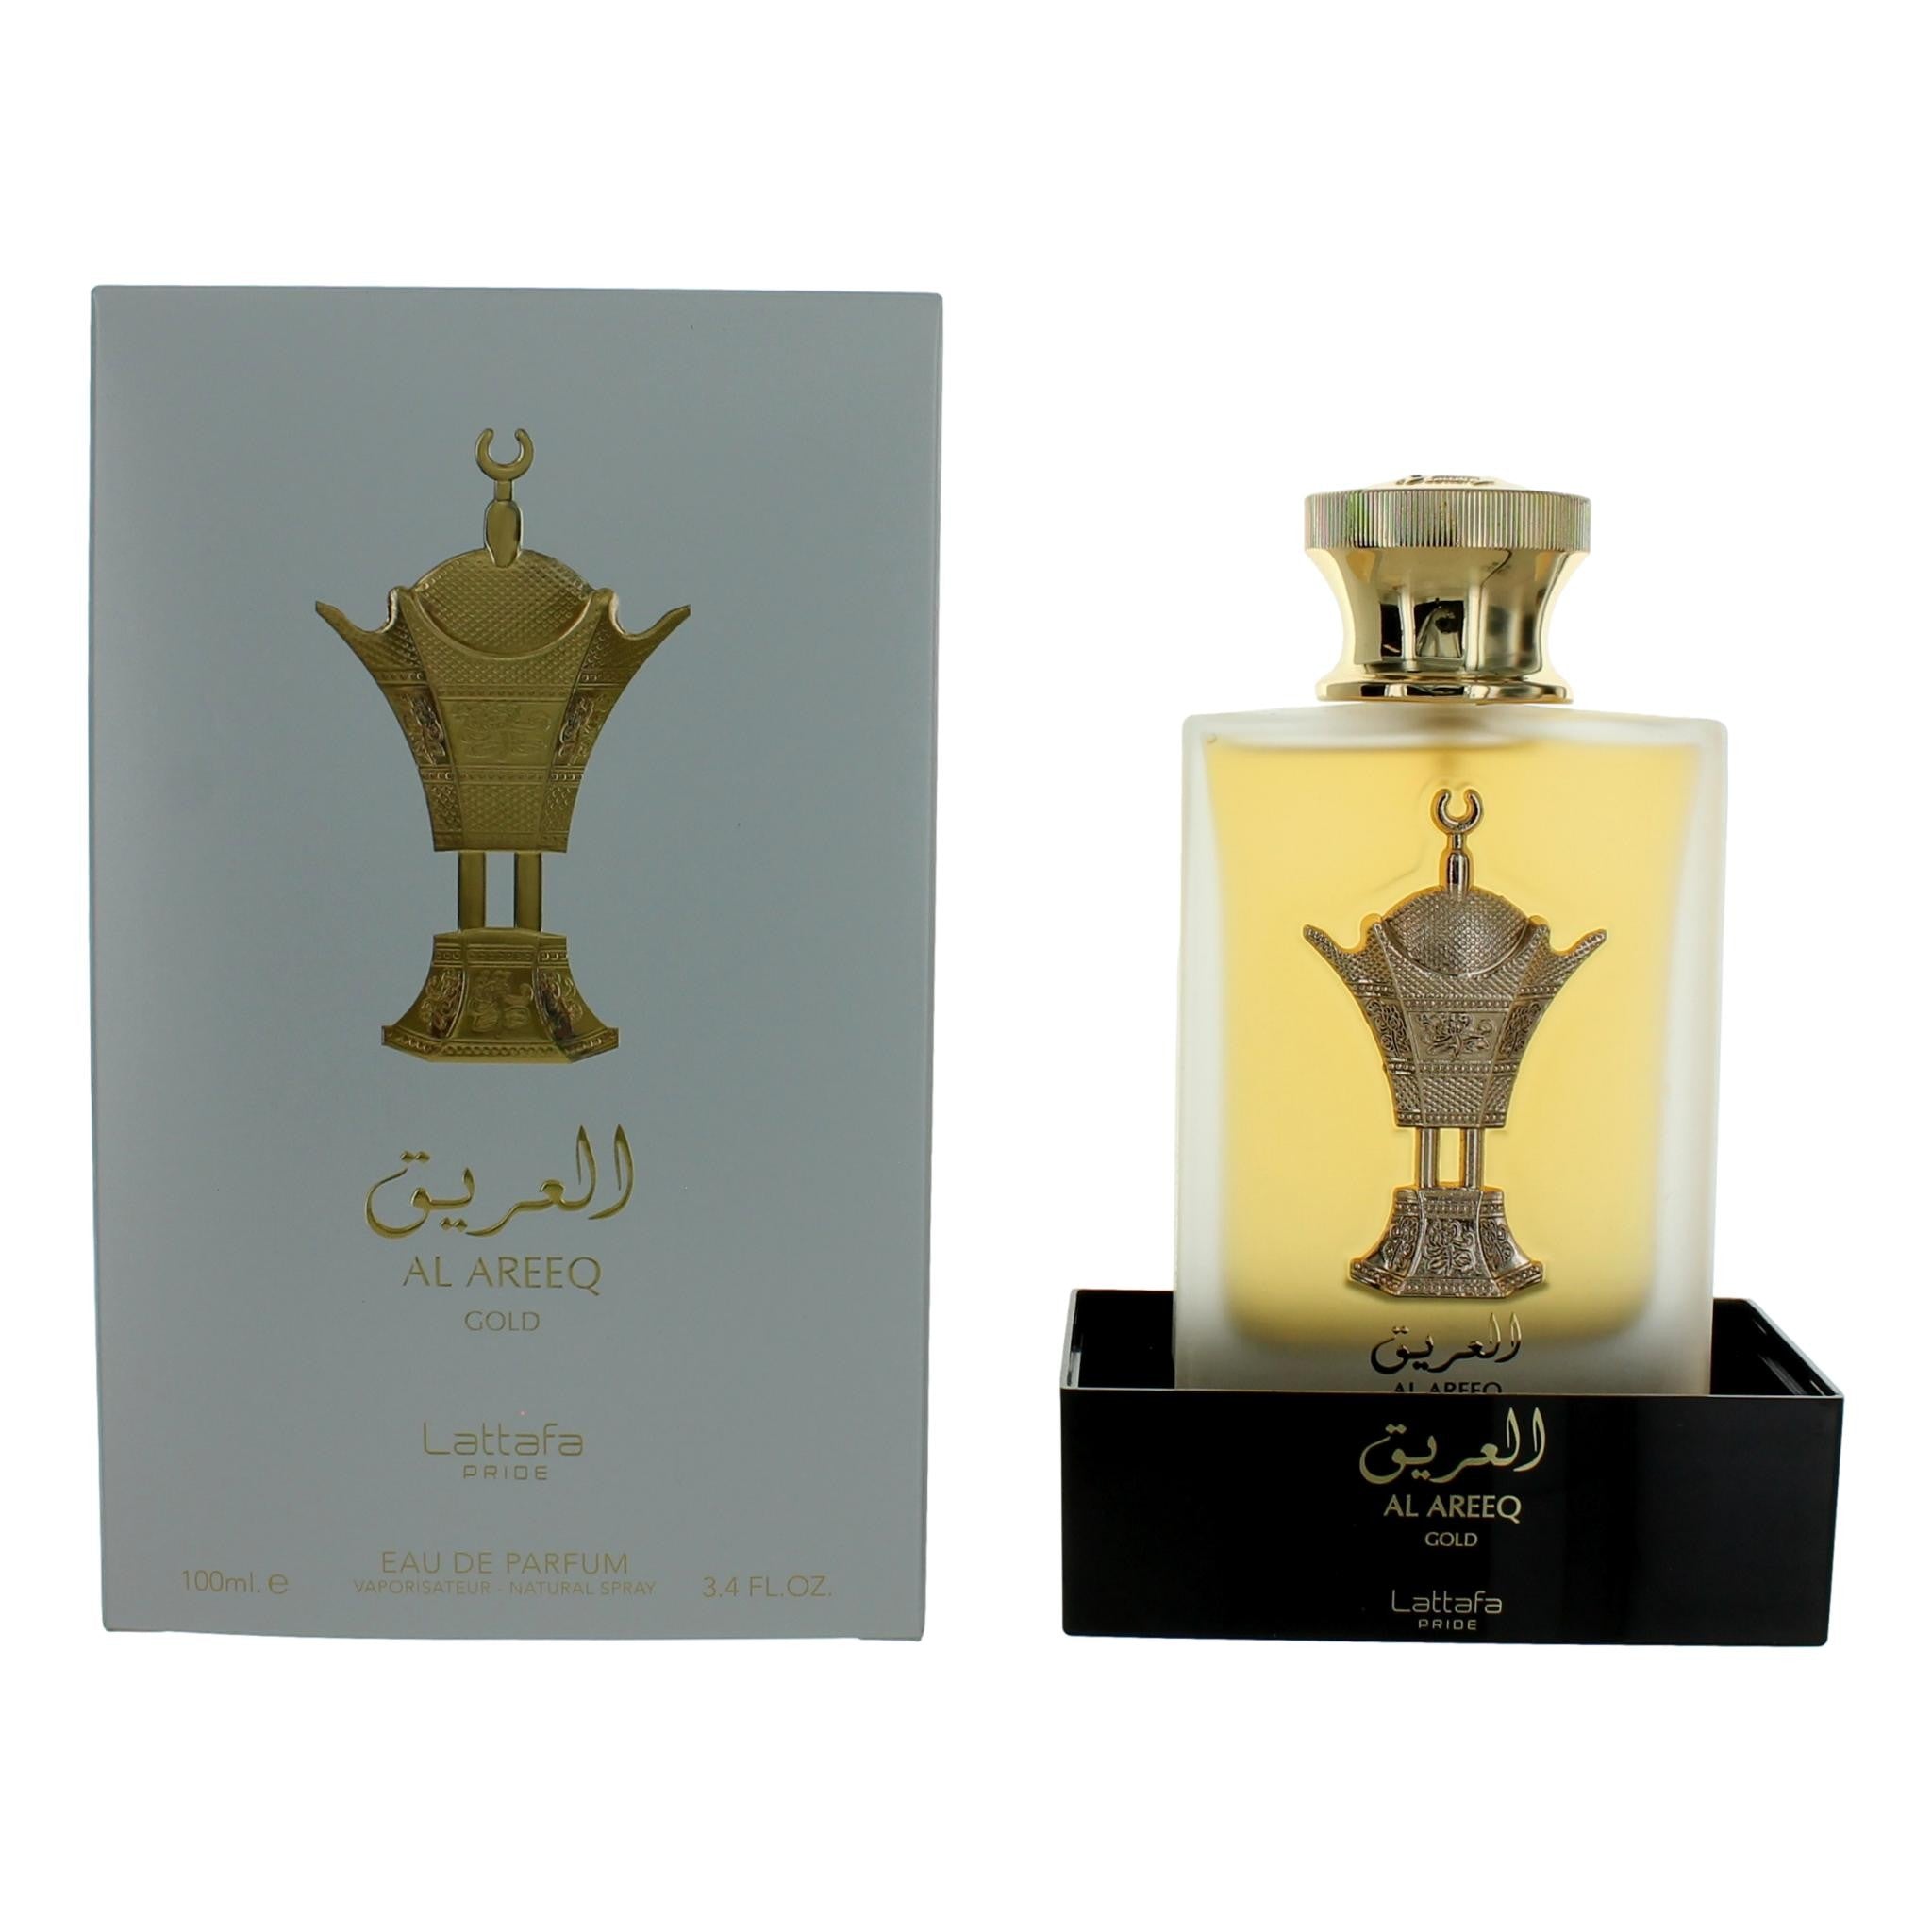 Bottle of Al Areeq Gold by Lattafa, 3.4 oz Eau De Parfum Spray for Unisex